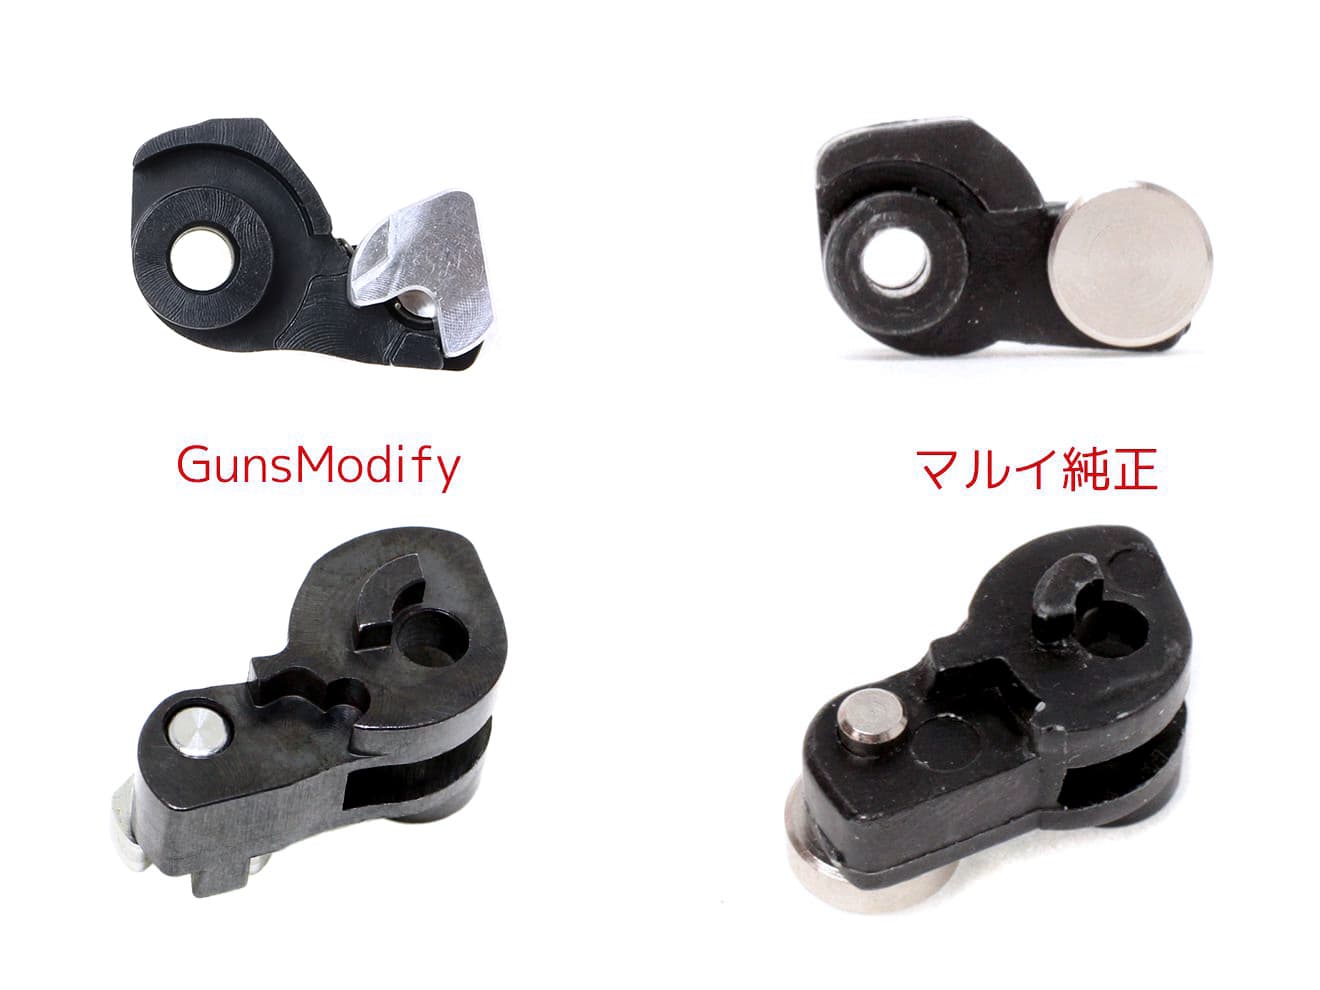 Guns Modify GLOCKシリーズ CNCスチール ZEROハンマー/シアー/ノッカーセット 2017